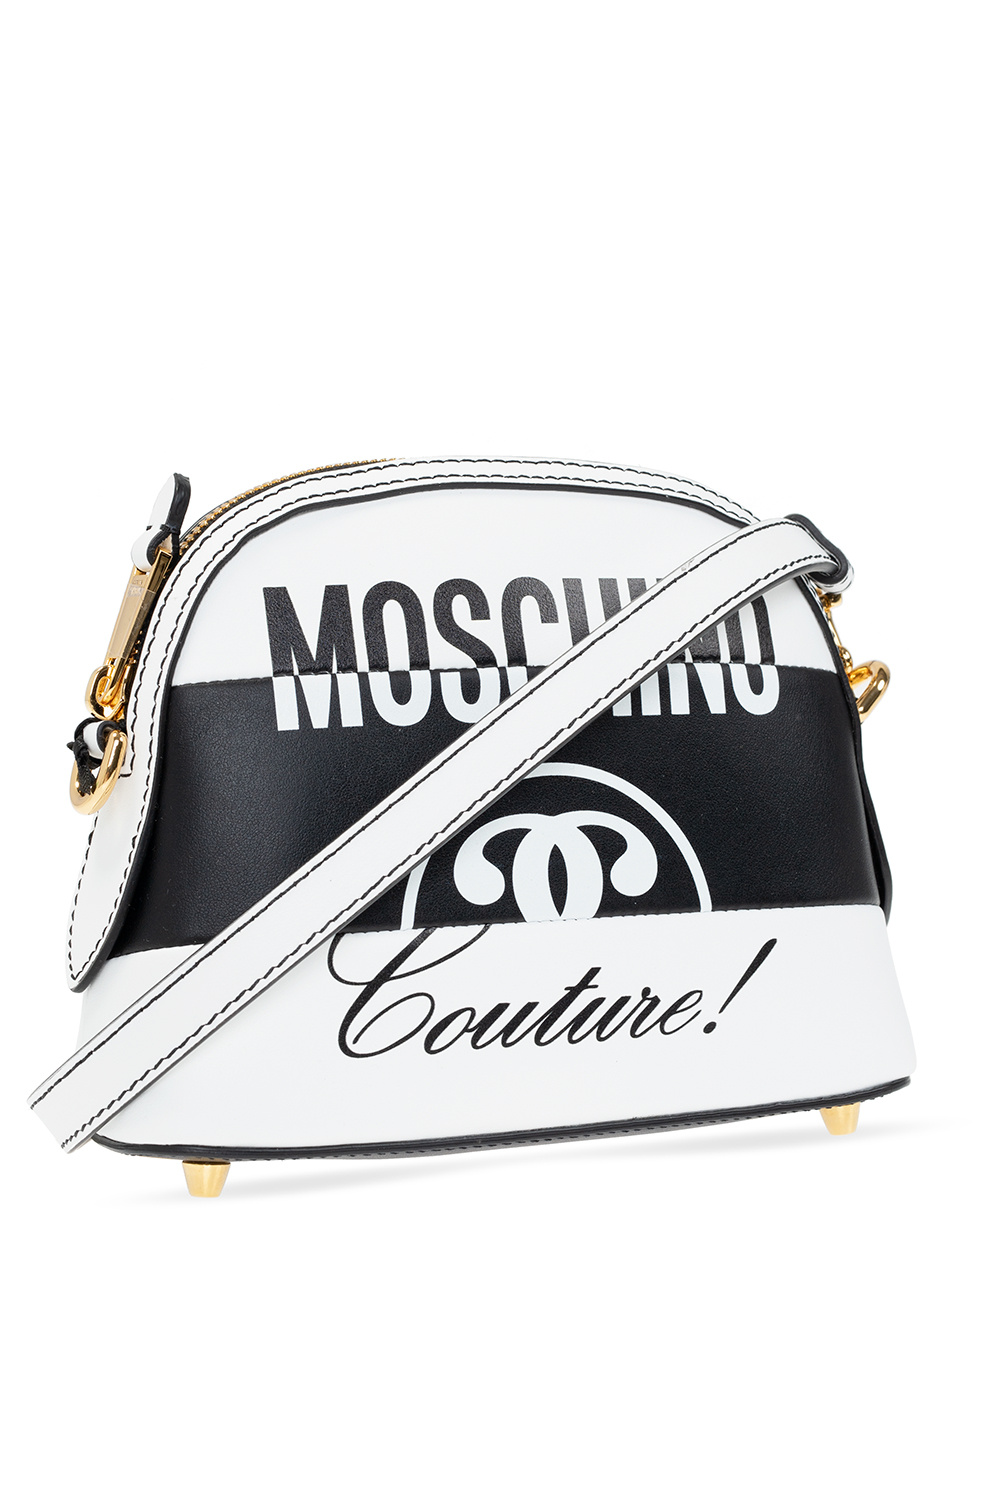 Moschino double zip make up bag